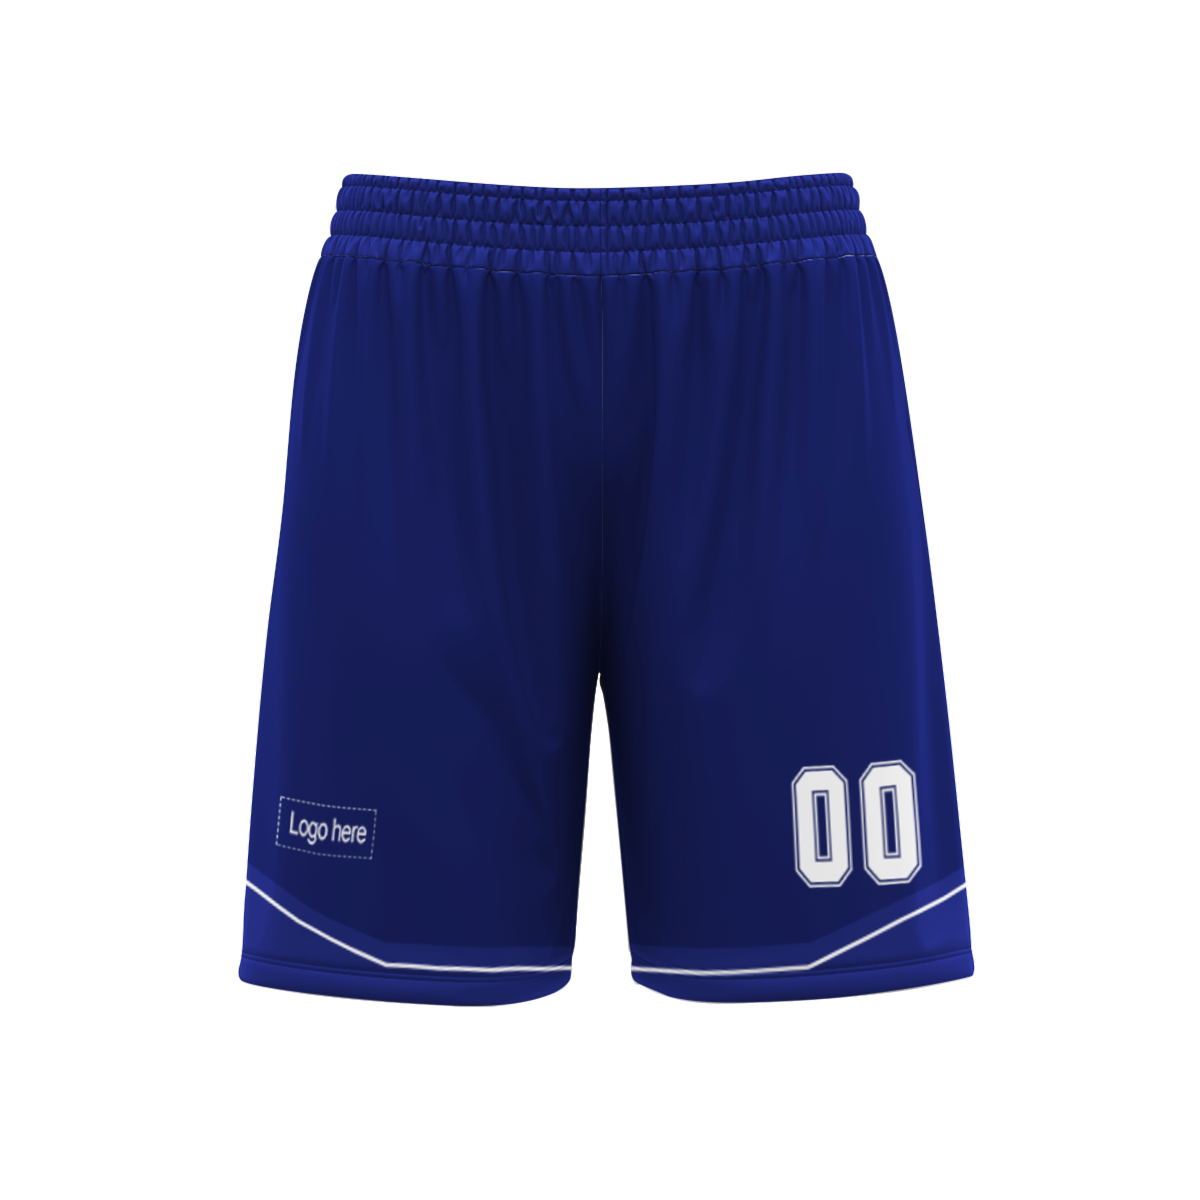 wholesale-customized-quick-dry-sportswear-basketball-suits-printing-logo-basketball-jerseys-at-cj-pod-7